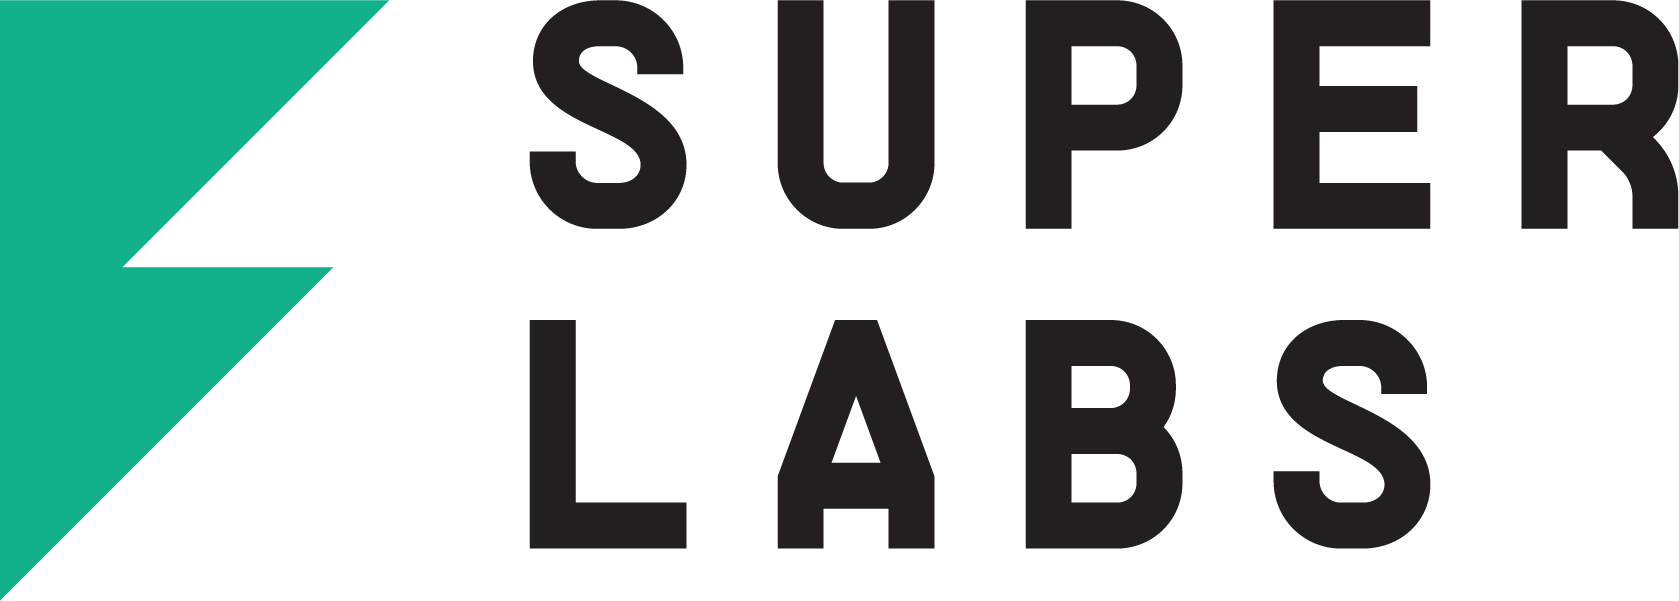 Super Labs